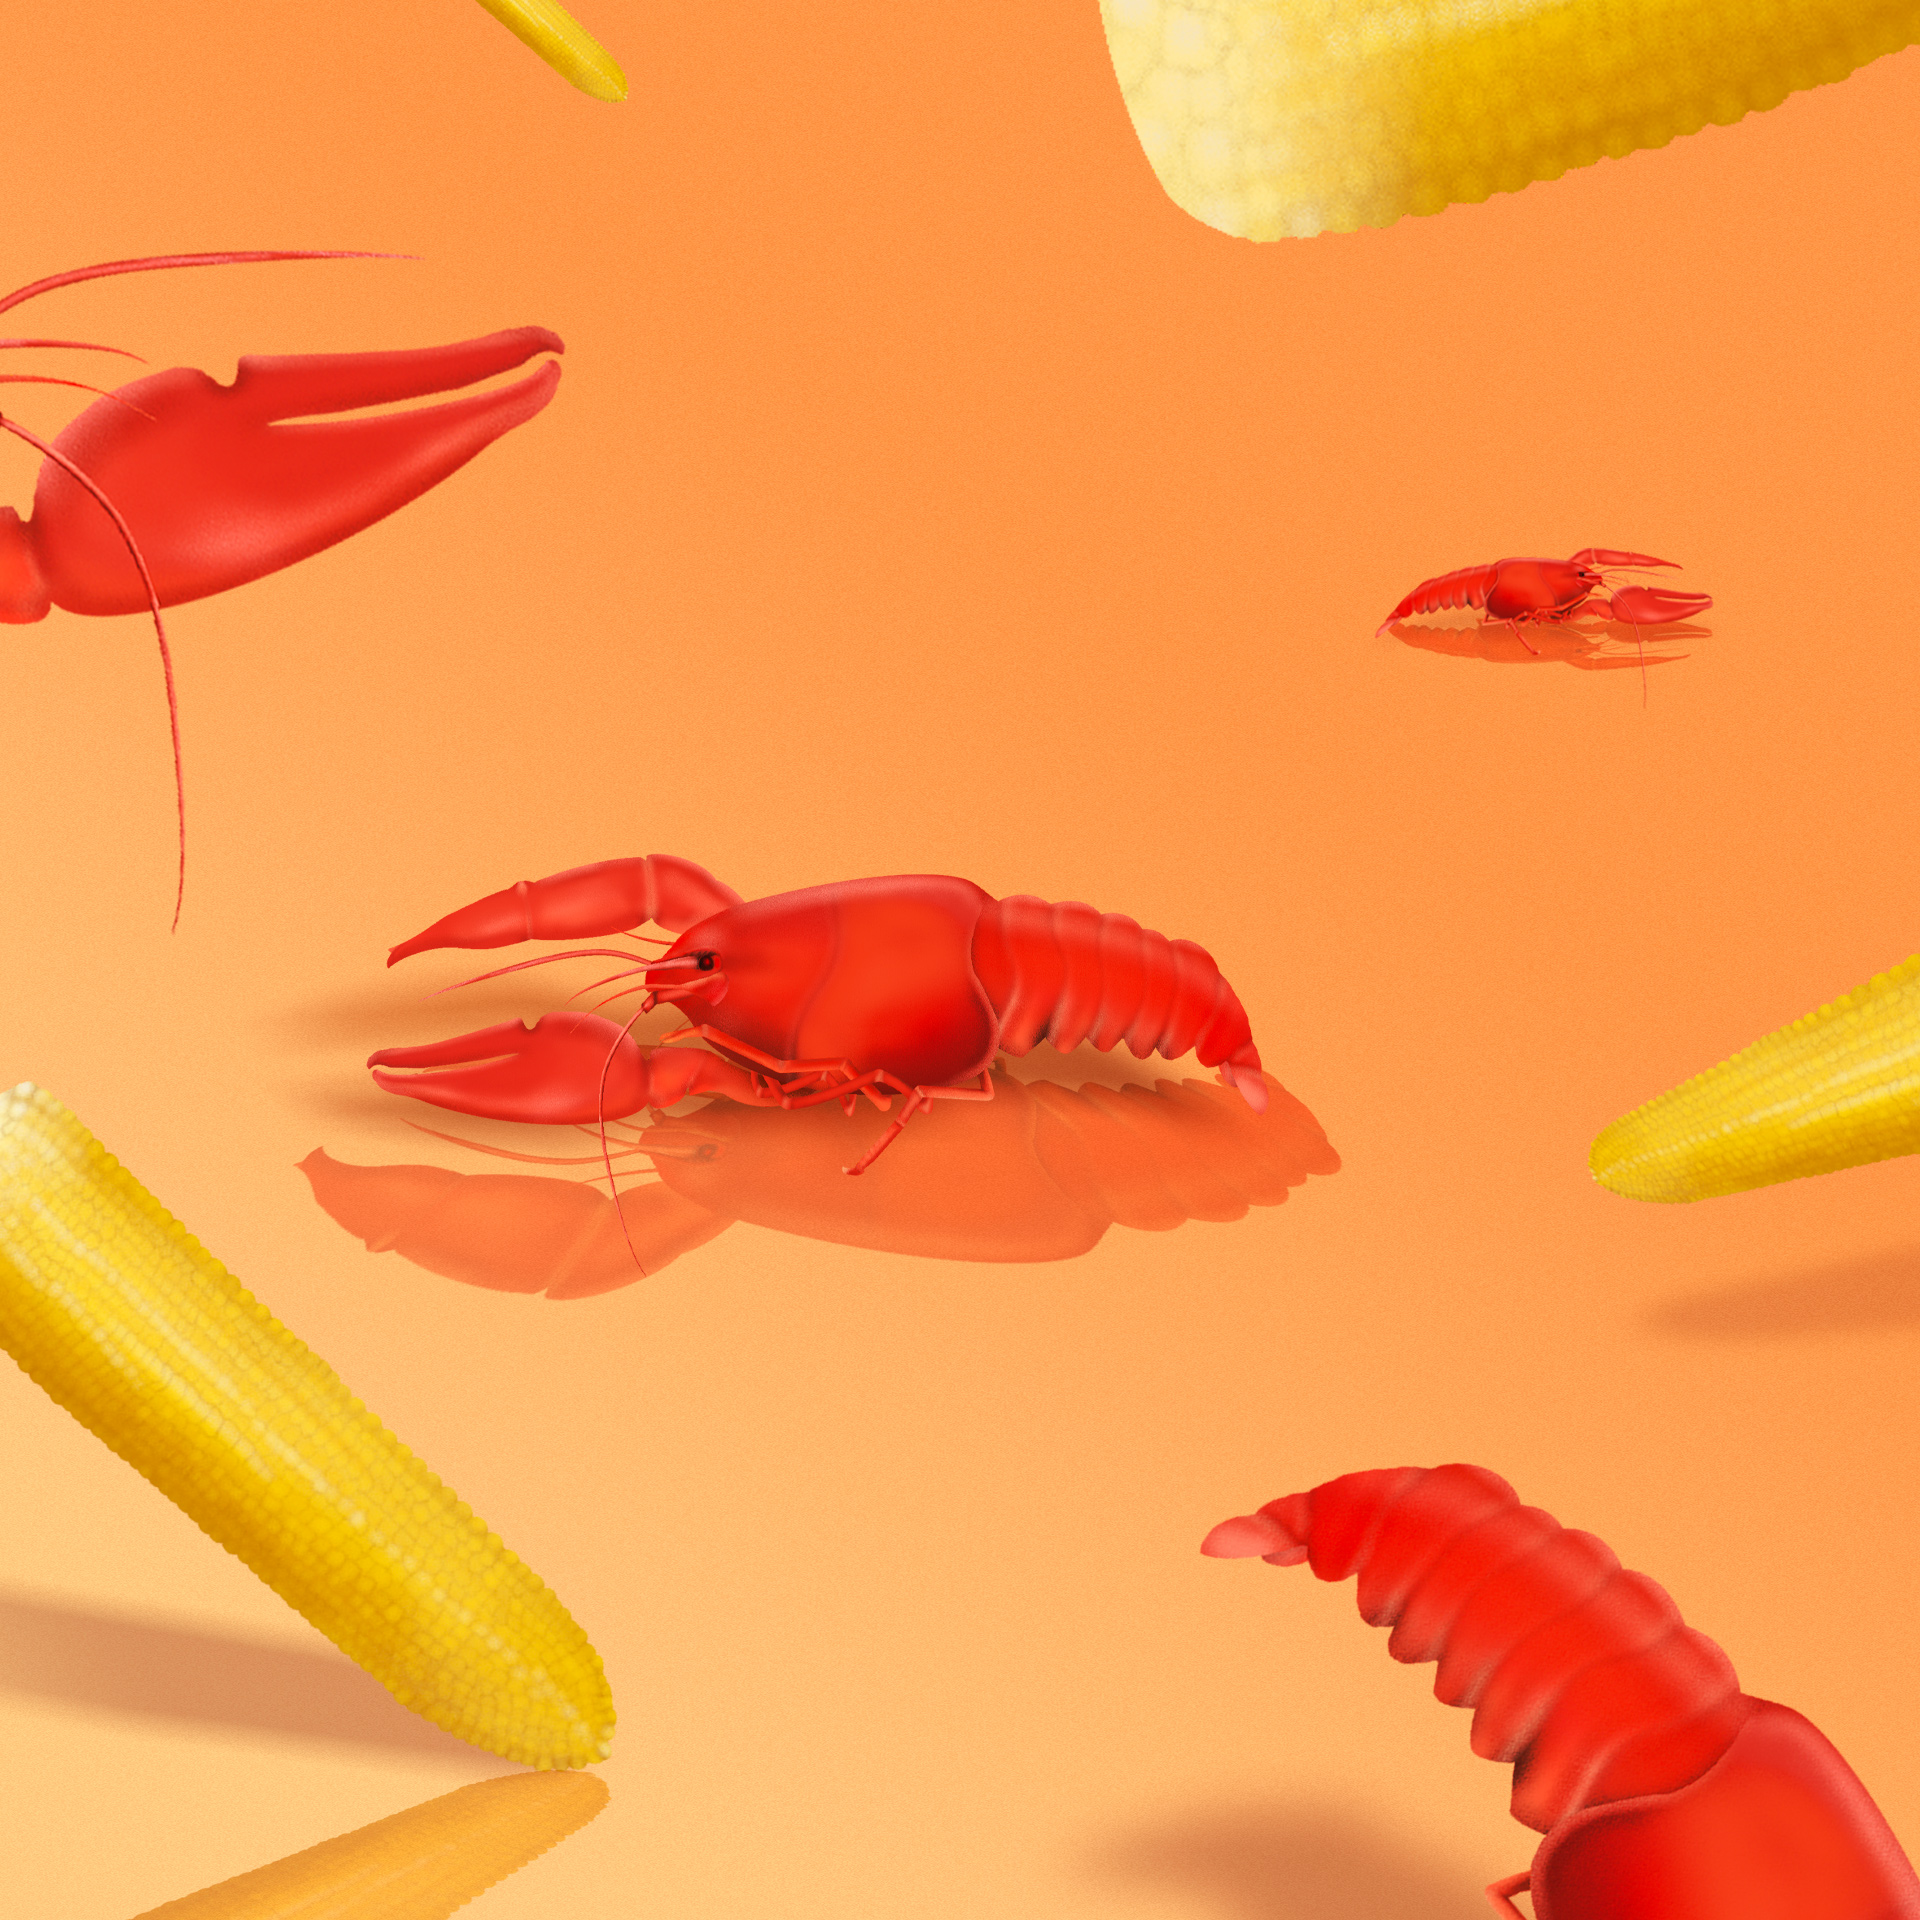 Crawfish-and-Corn-Illustration